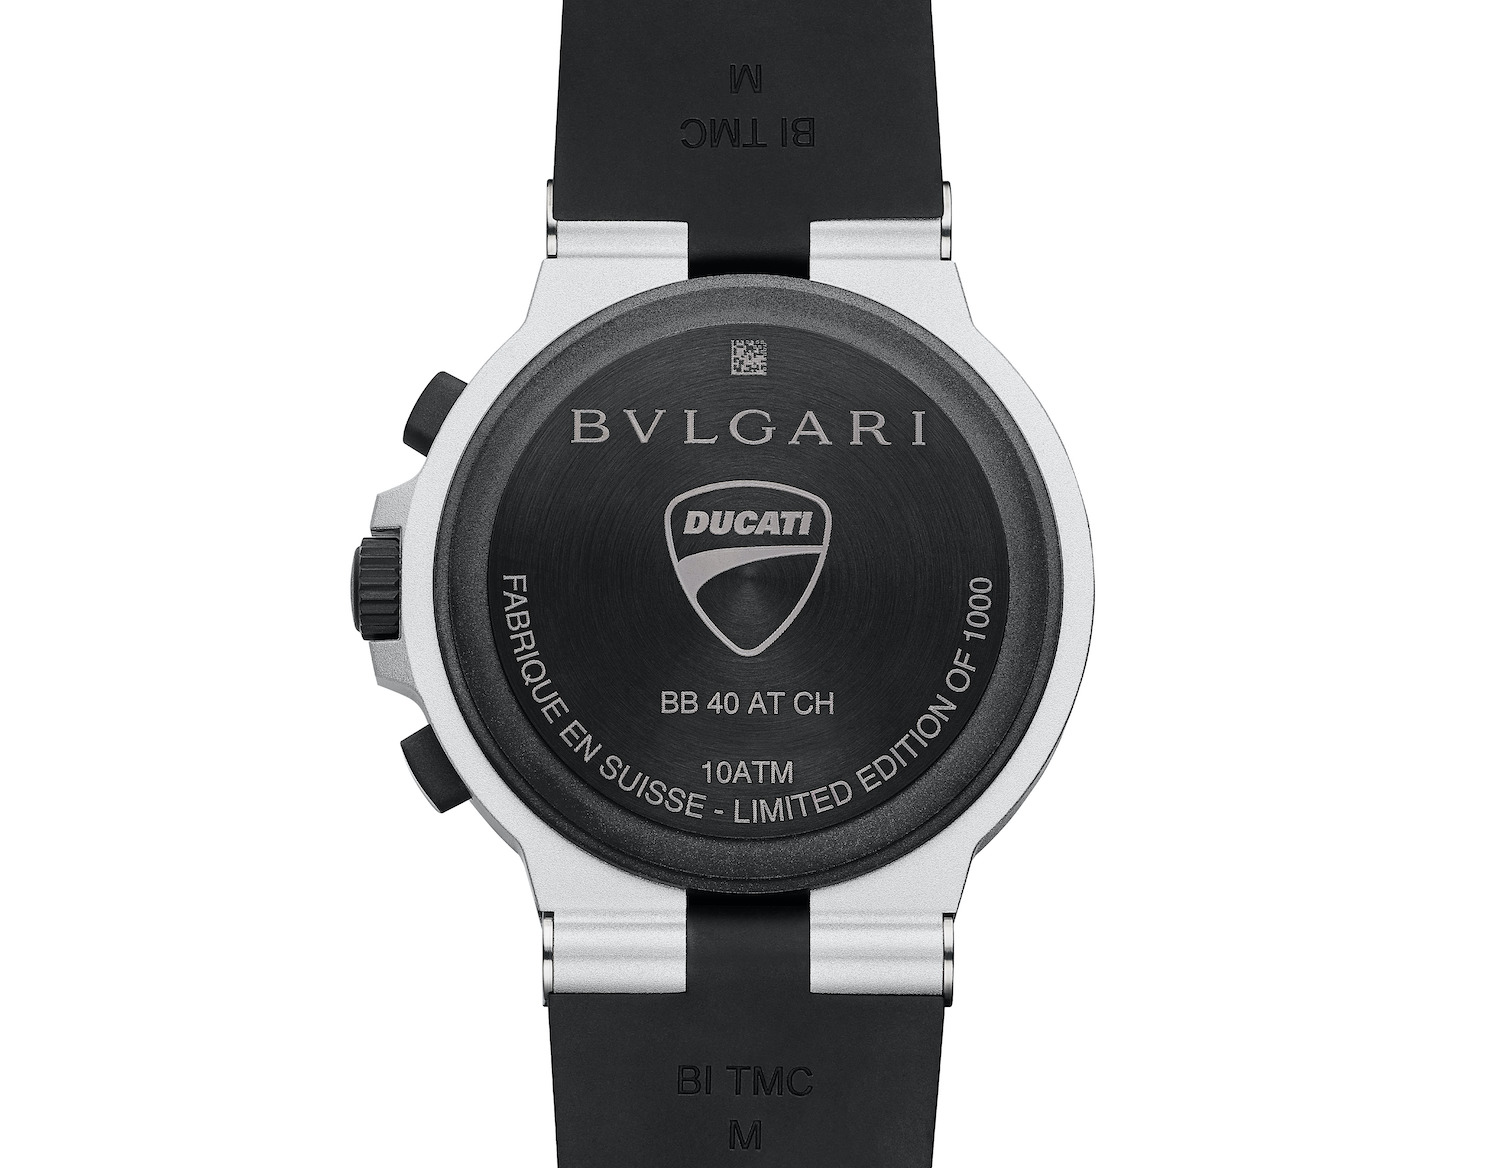 Bulgari Aluminium Chronograph Ducati Special Edition watch